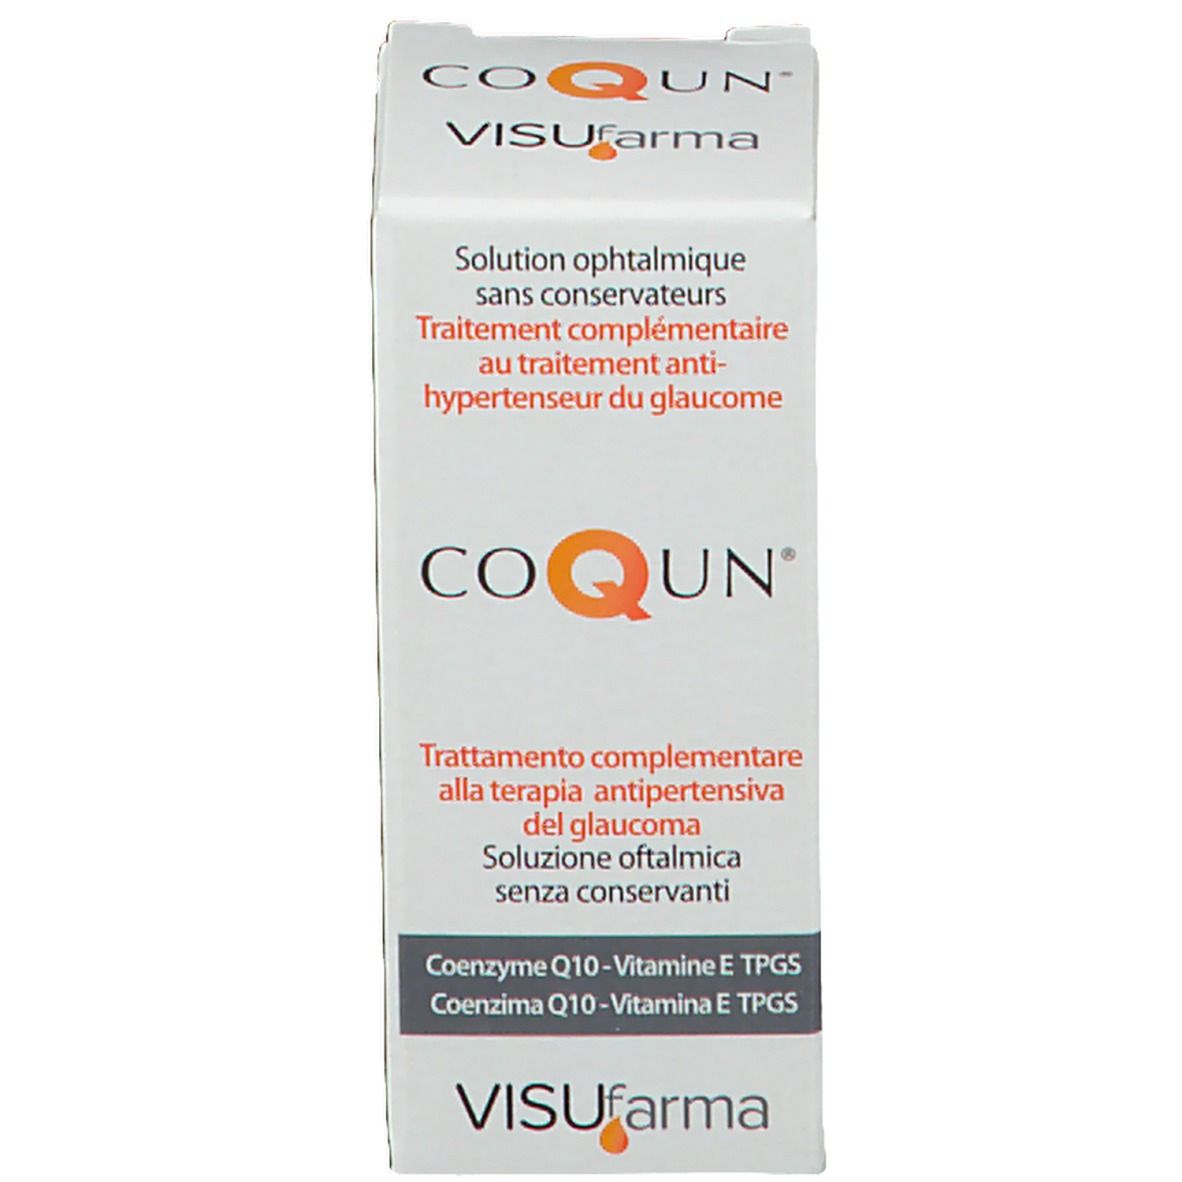 Coqun® Solution oculaire